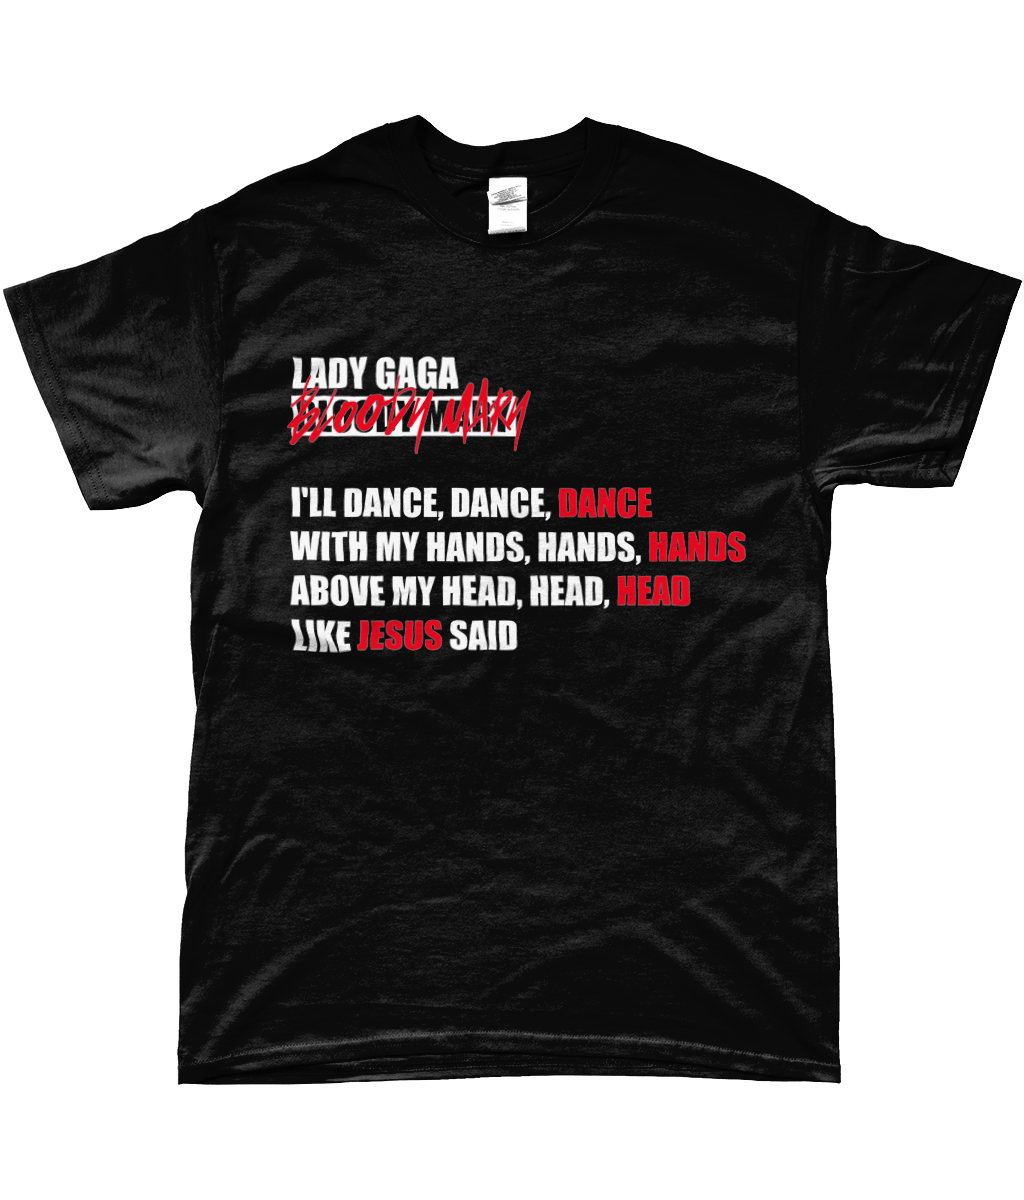 Lady Gaga Bloody Mary Lyric Graphic T-Shirt